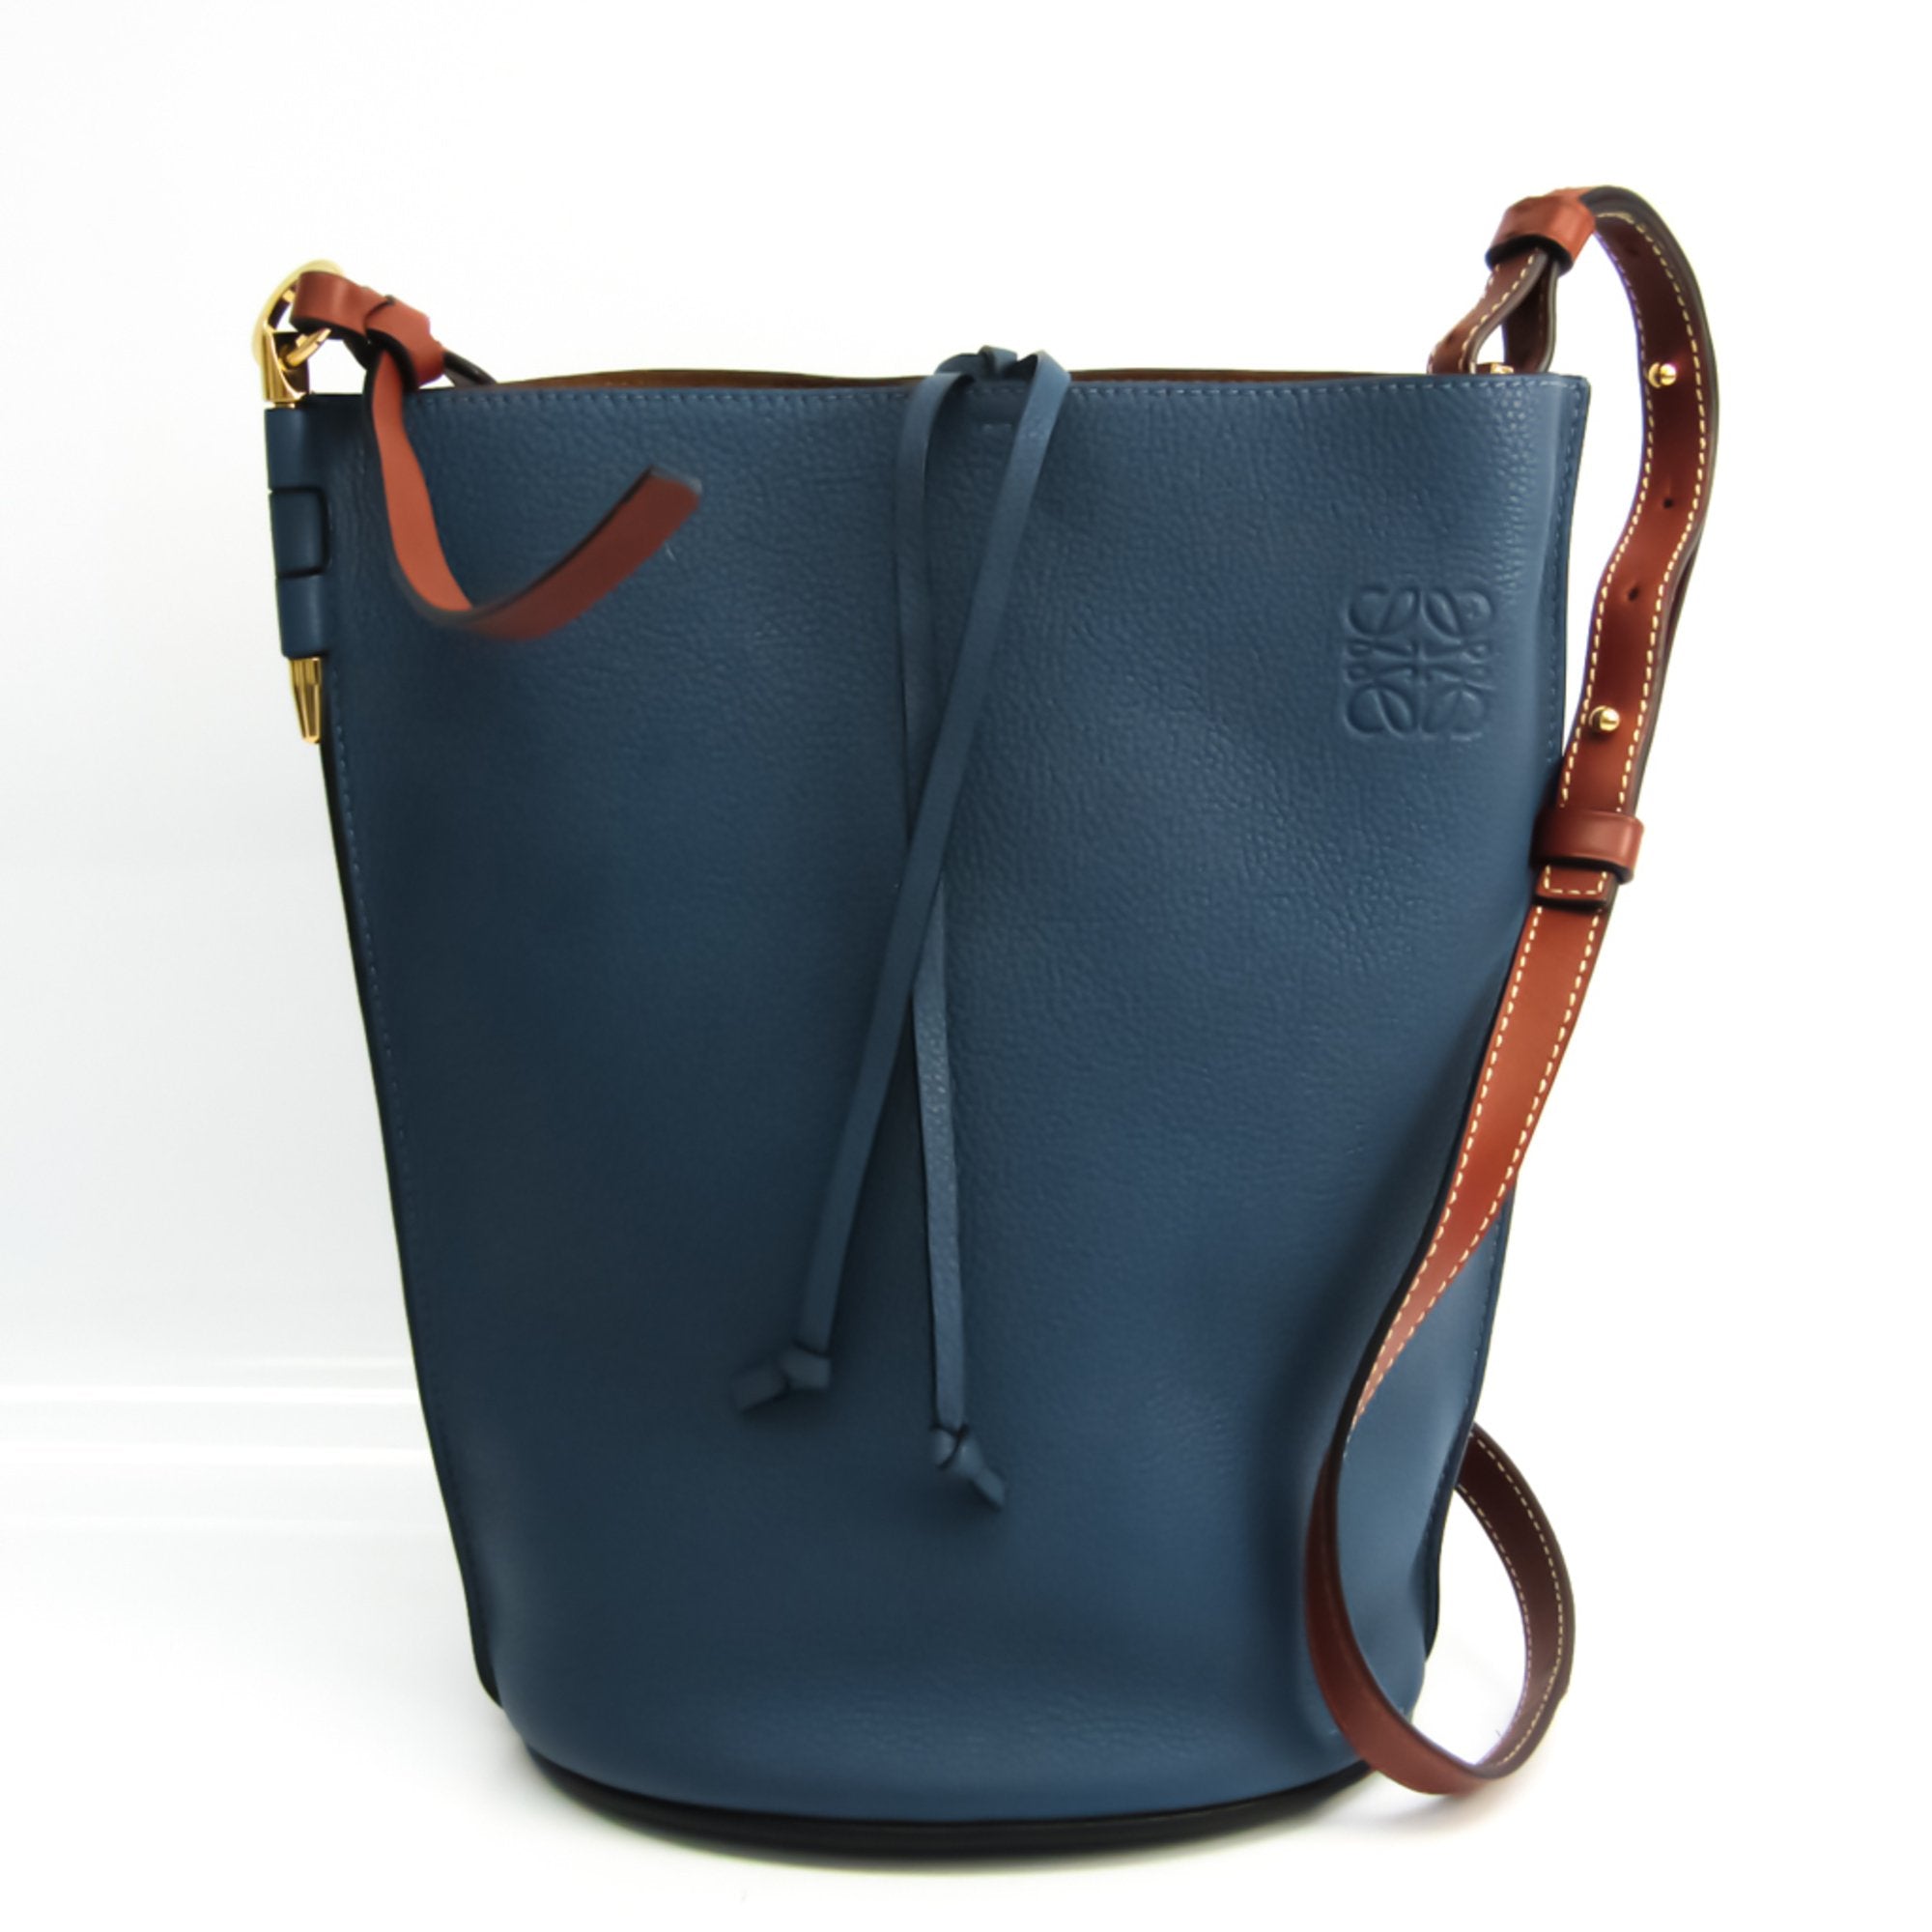 Loewe Gate Bag Handbag 365882